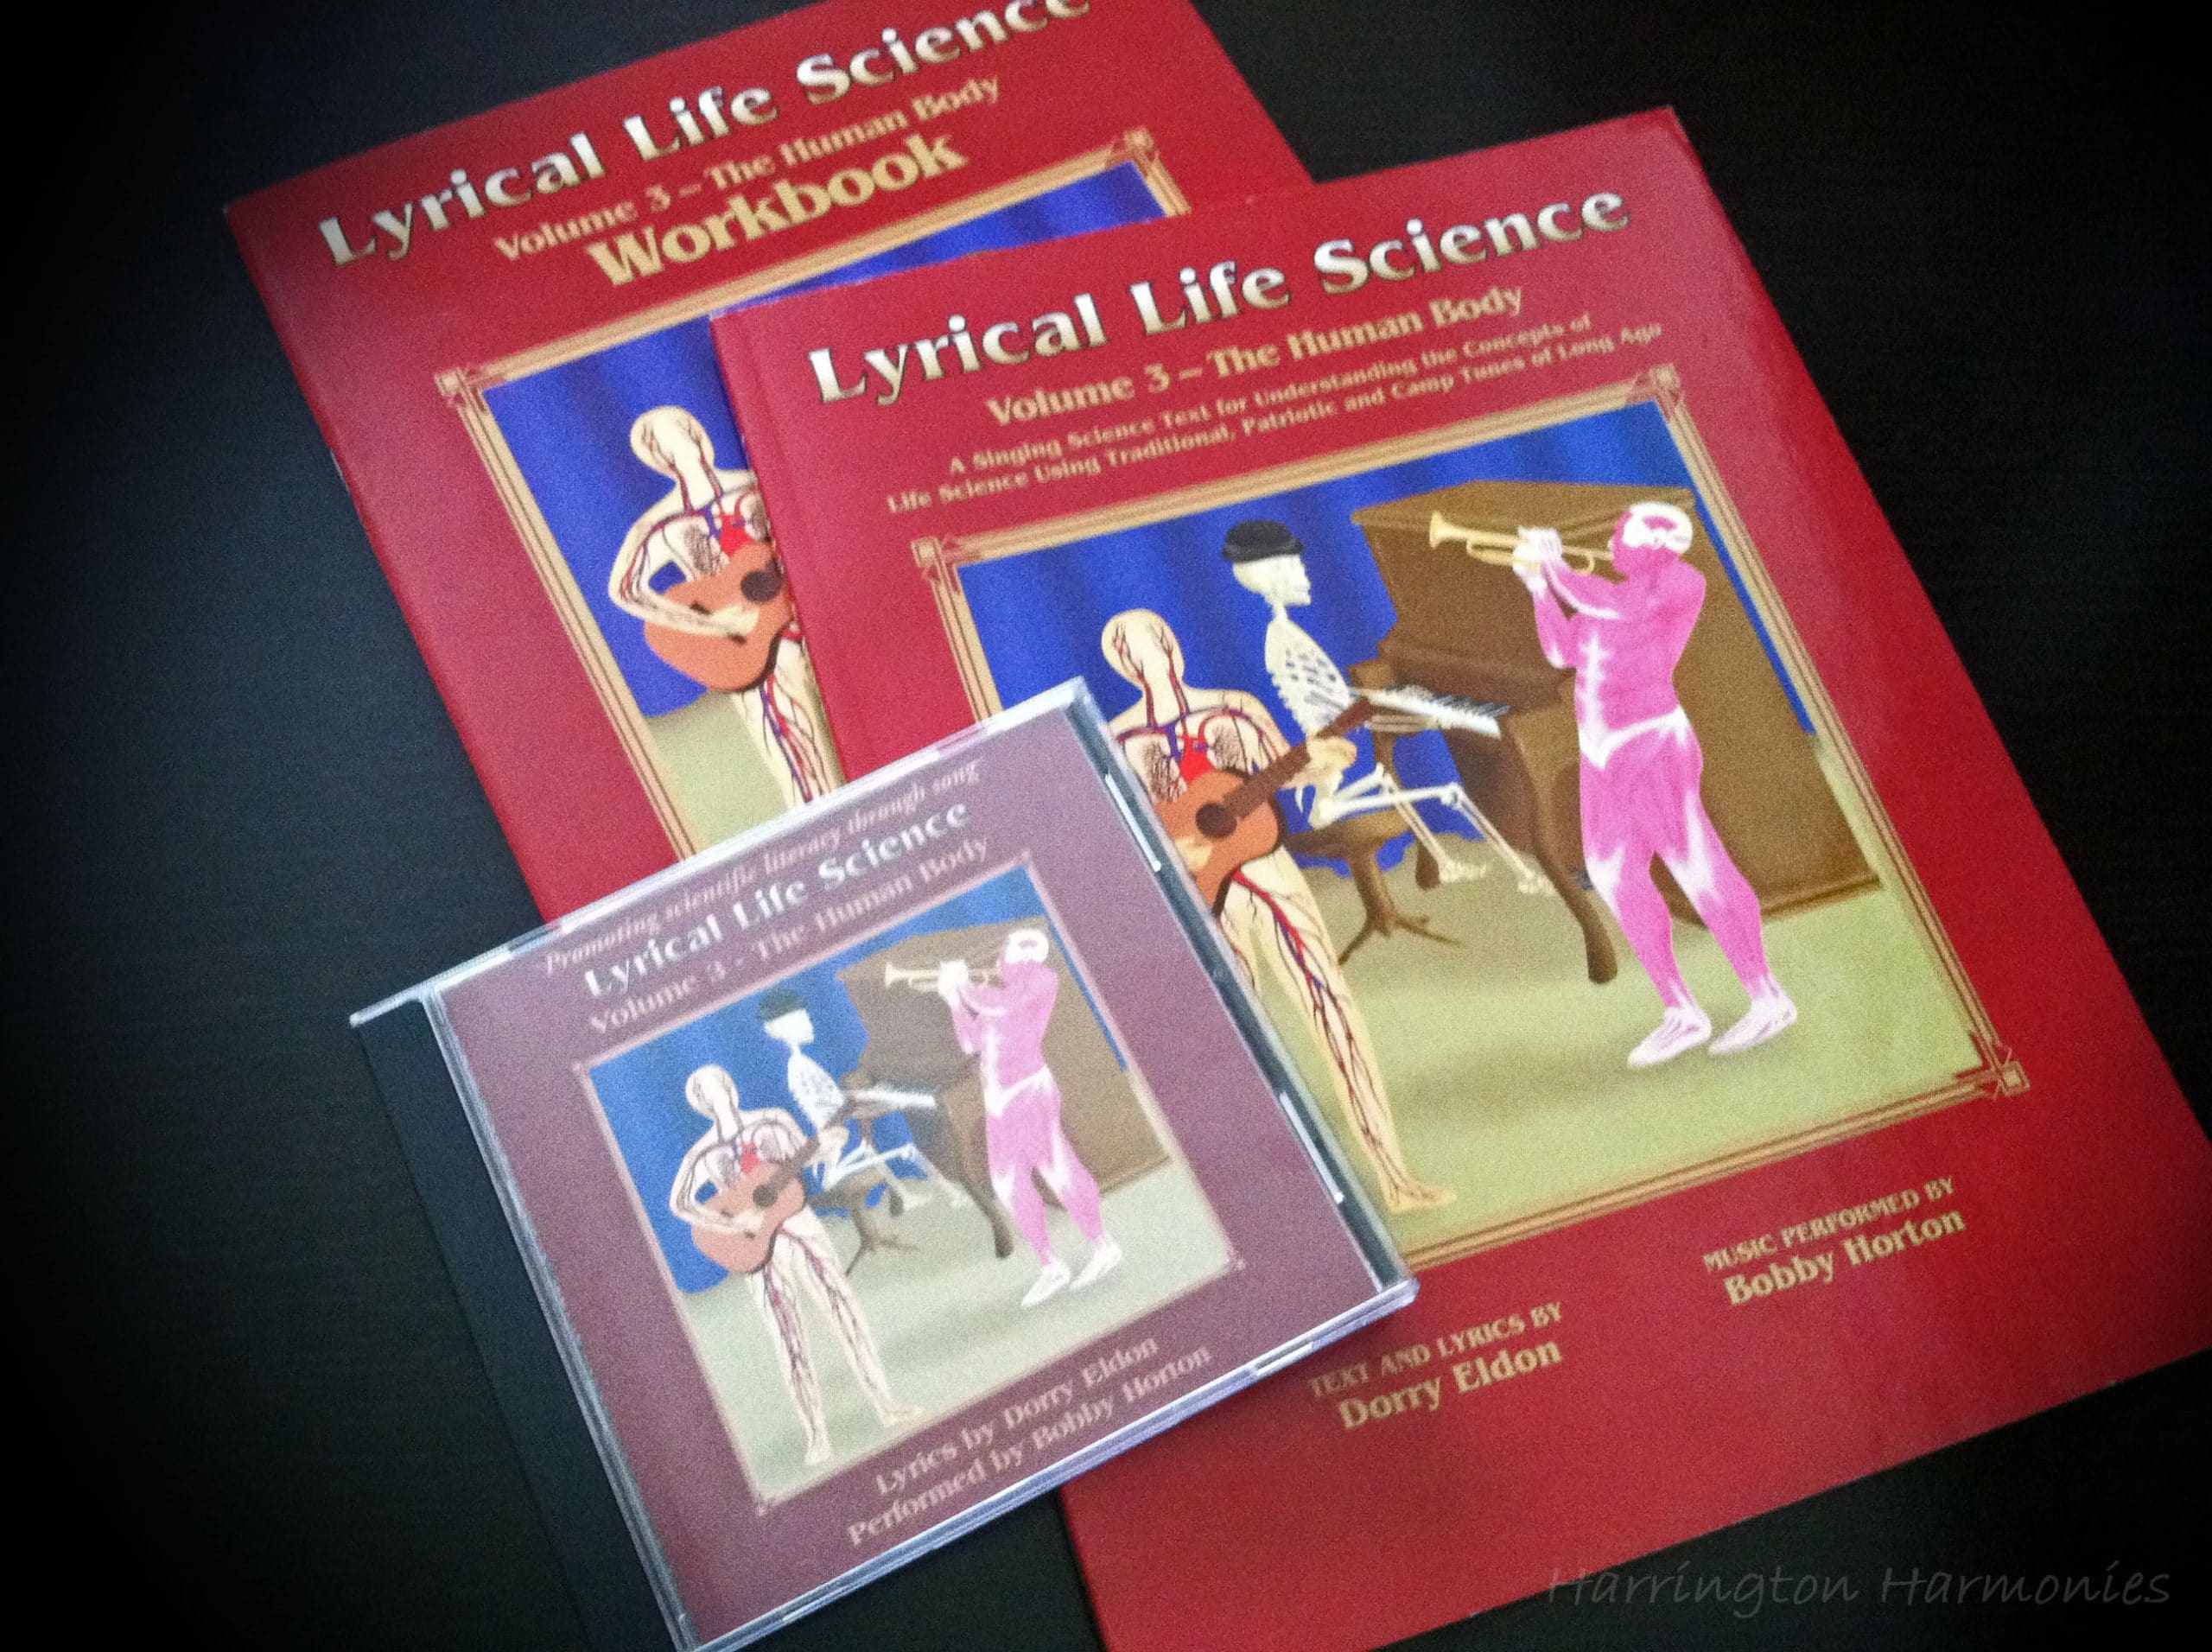 Lyrical Life Science- Volume 3 The Human Body